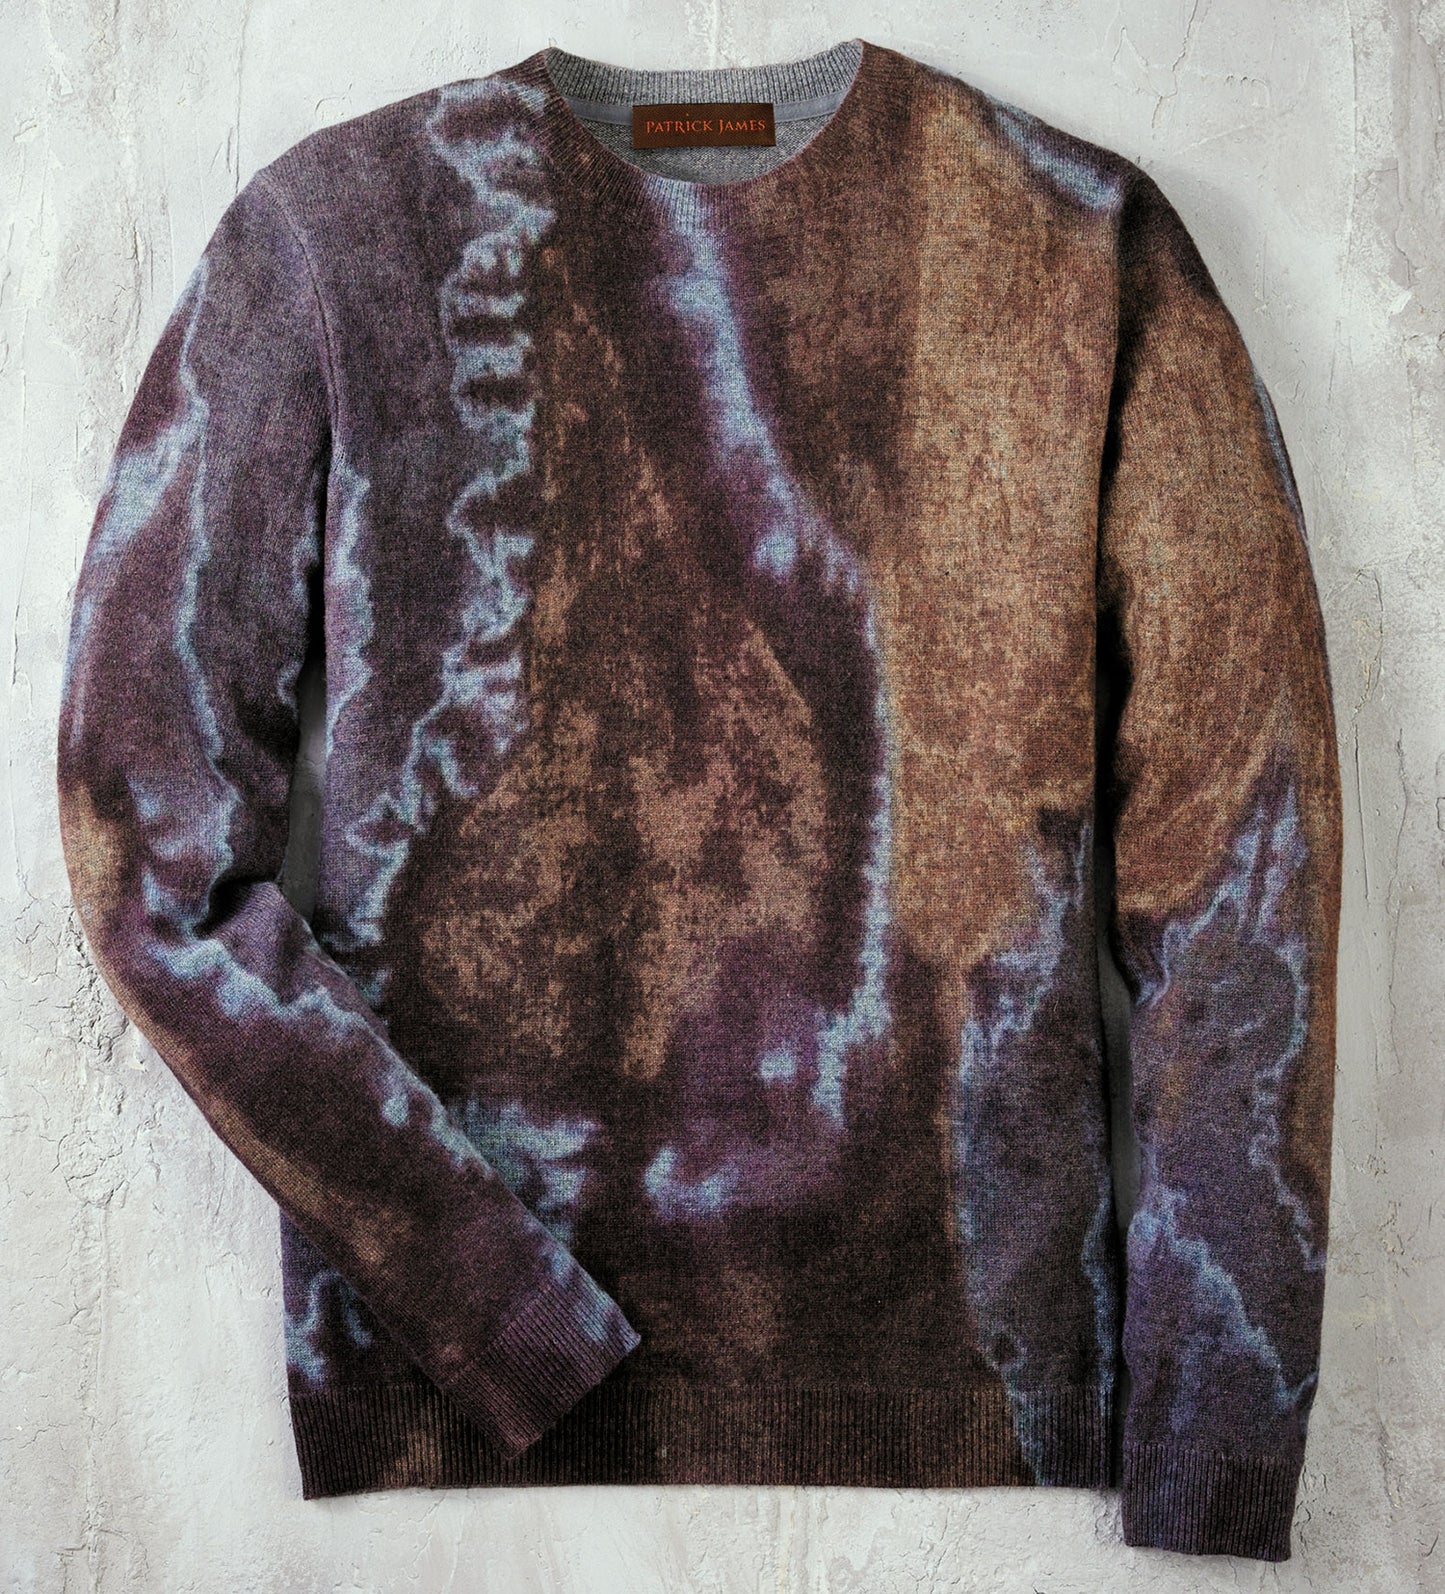 Patrick James Scorched Print Cashmere Sweater